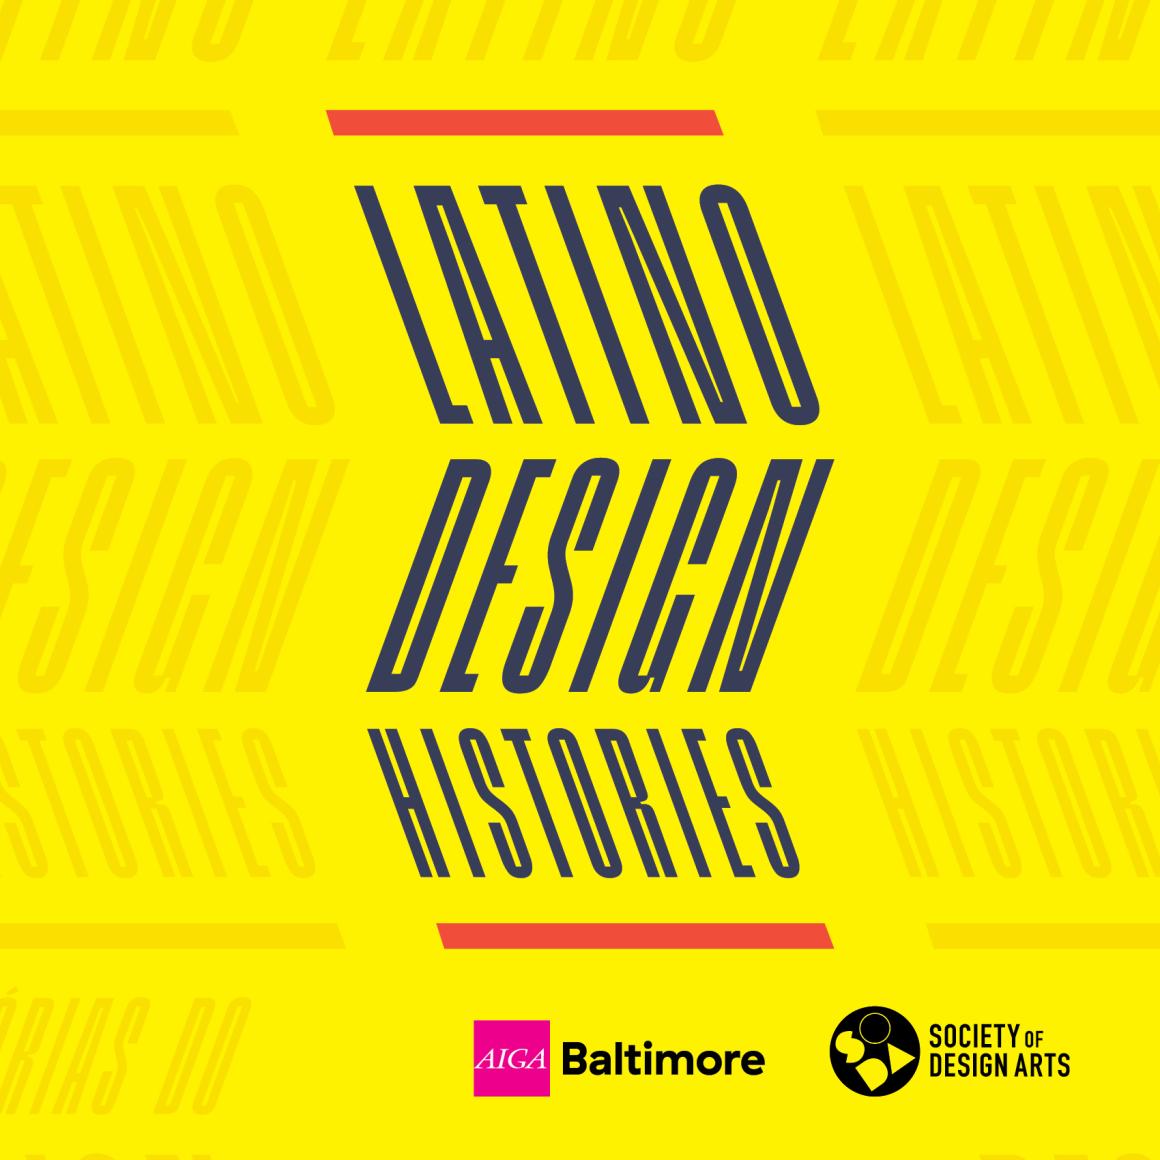 Latino Design Histories Series